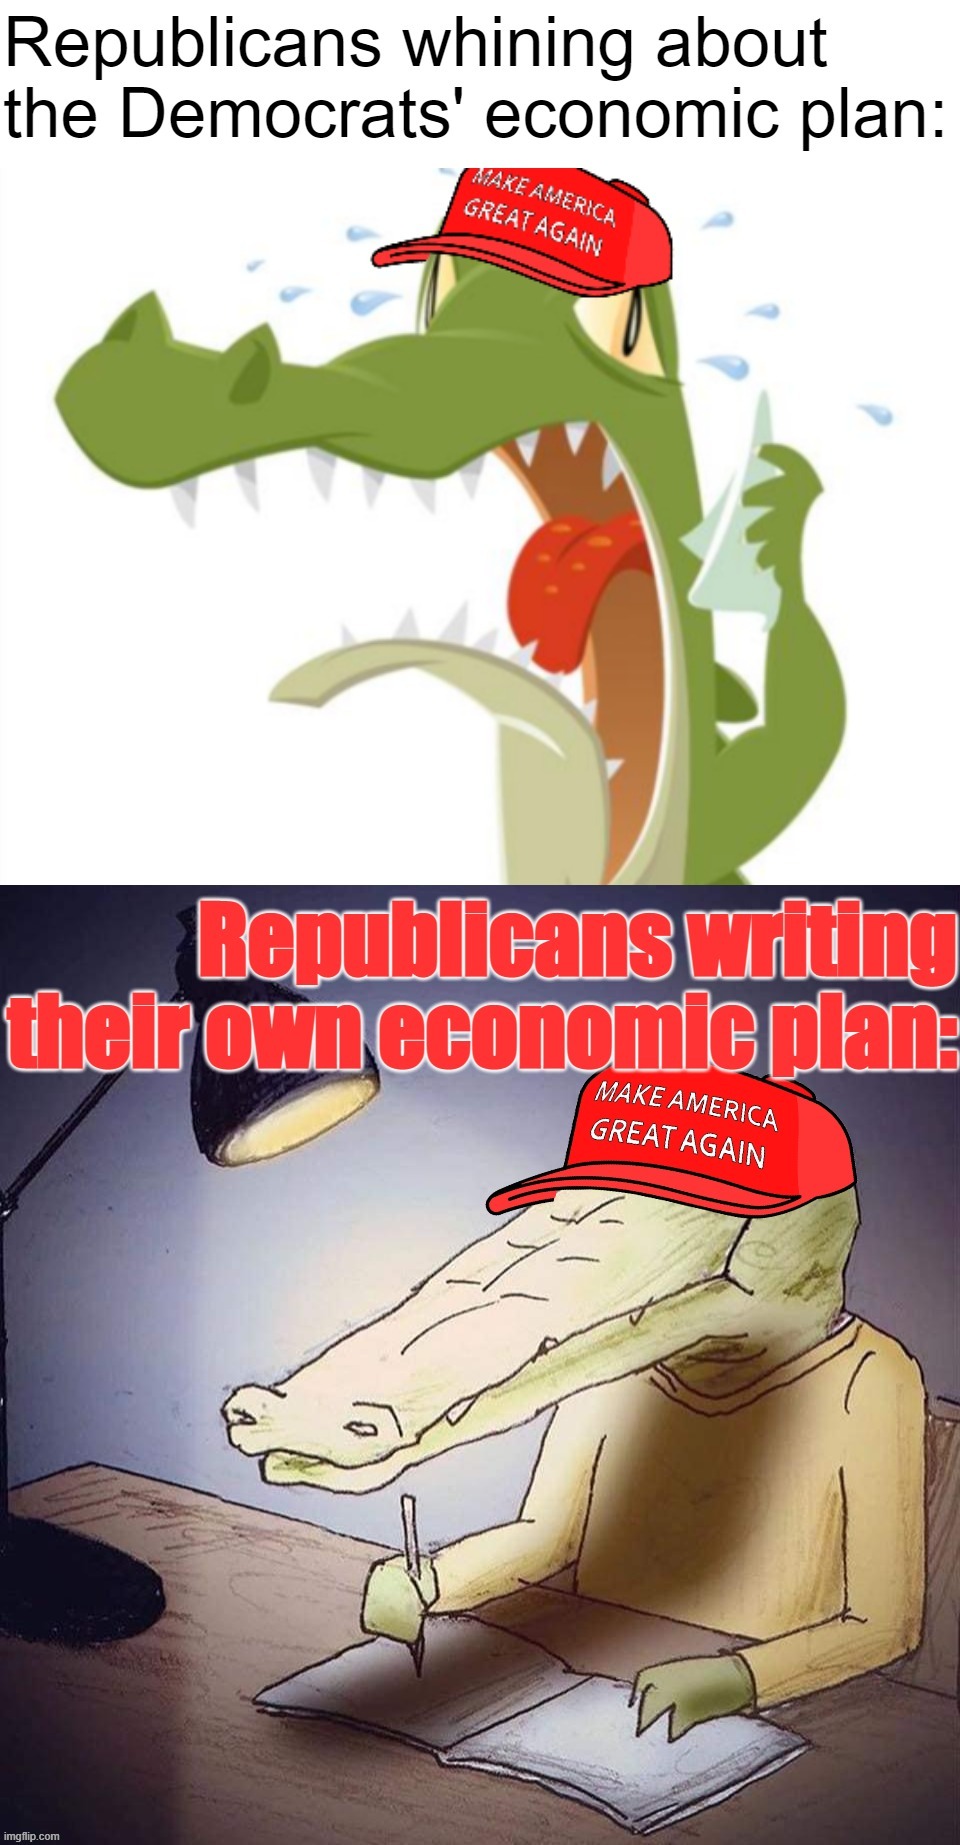 Republican crocodile tears over the economy | image tagged in republican crocodile tears over the economy | made w/ Imgflip meme maker